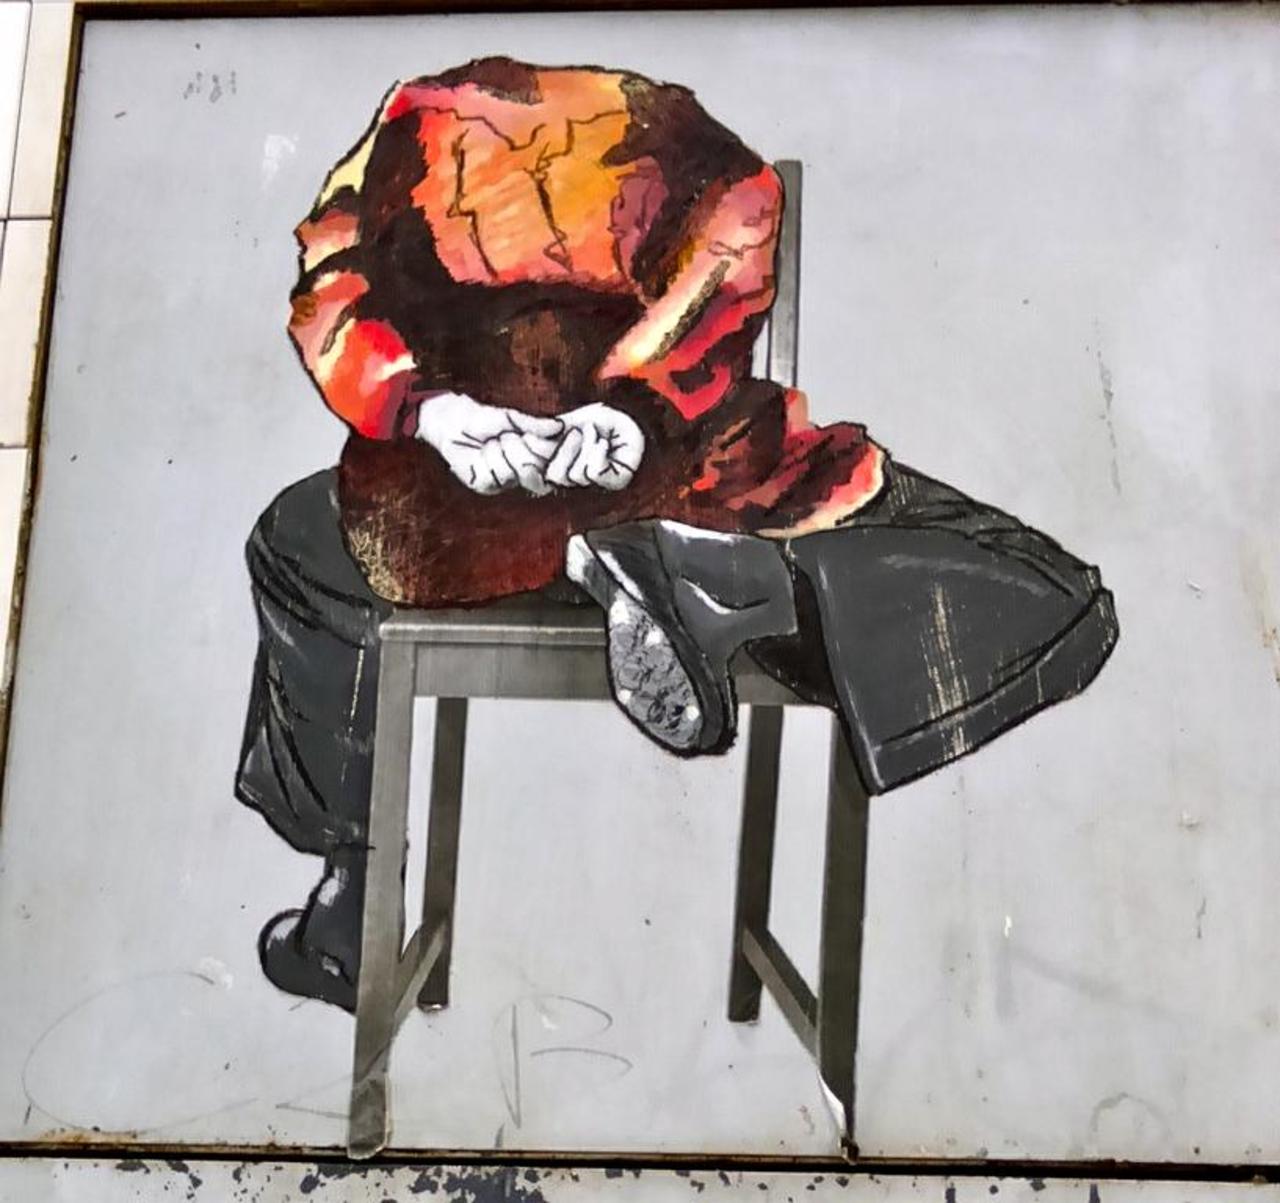 Street Art by anonymous in #Vitry-sur-Seine http://www.urbacolors.com #art #mural #graffiti #streetart https://t.co/1qRaF1Pq1F